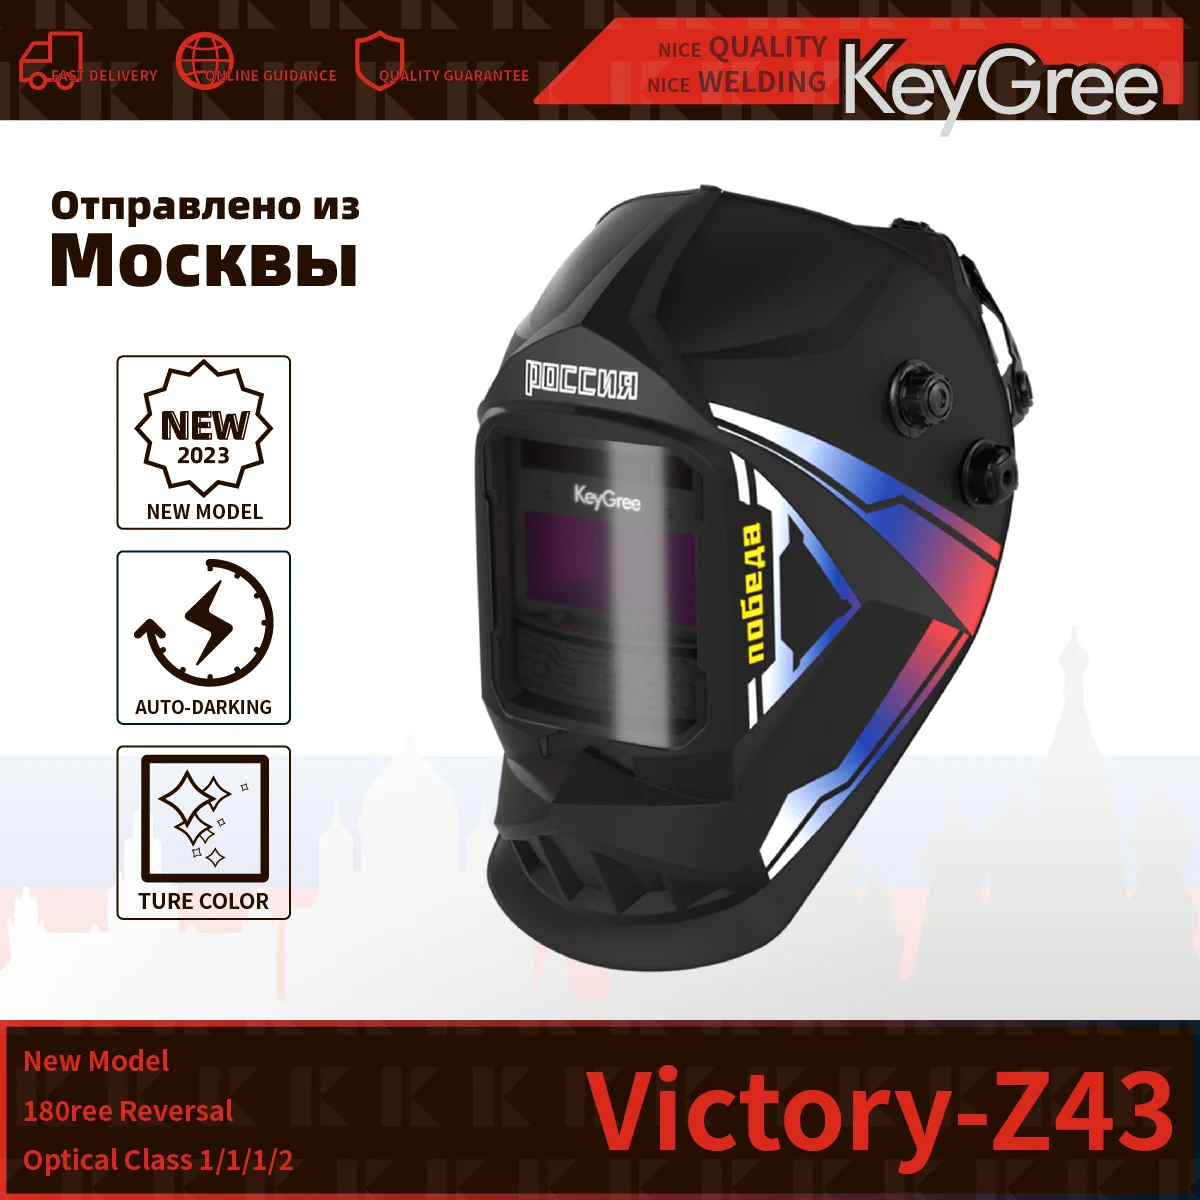 KeyGree Professional Protective Chameleon Welding Helmet 2 Arc Sensor For TIG MIG MMA True Color/Solar Cell 2023NEW Welding Mask